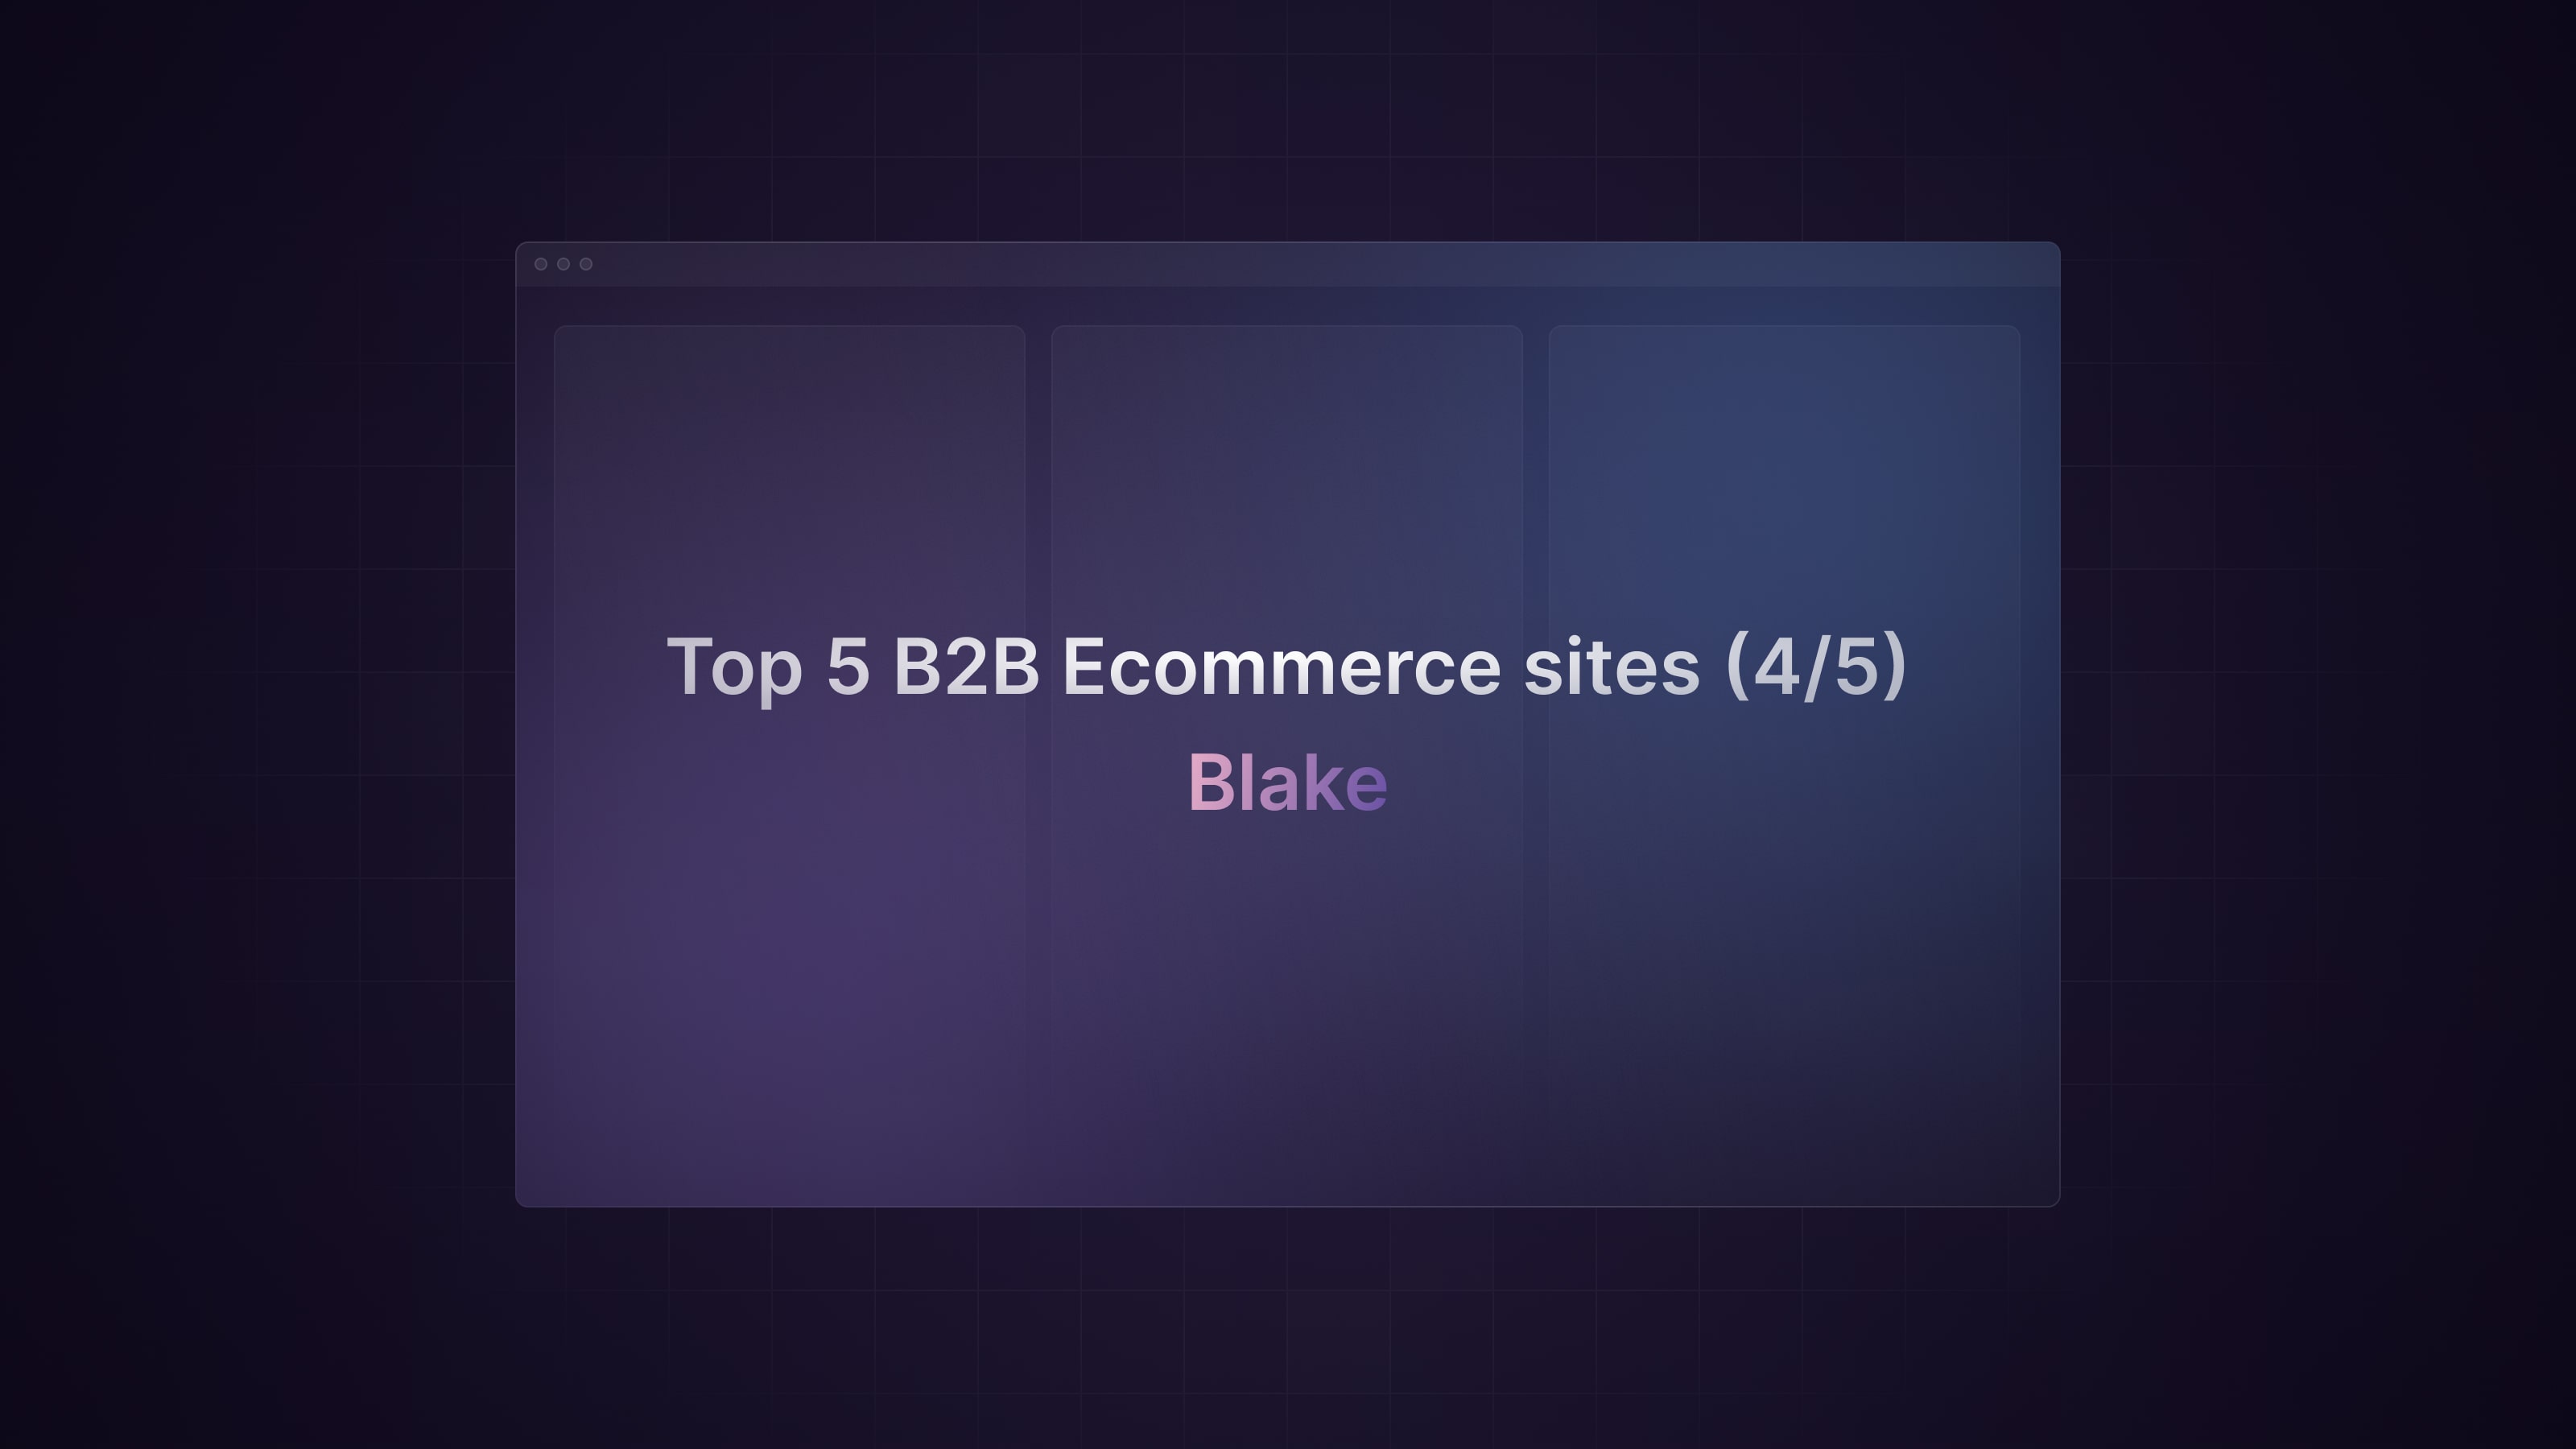 Top 5 B2B Ecommerce sites: Blake (4/5)